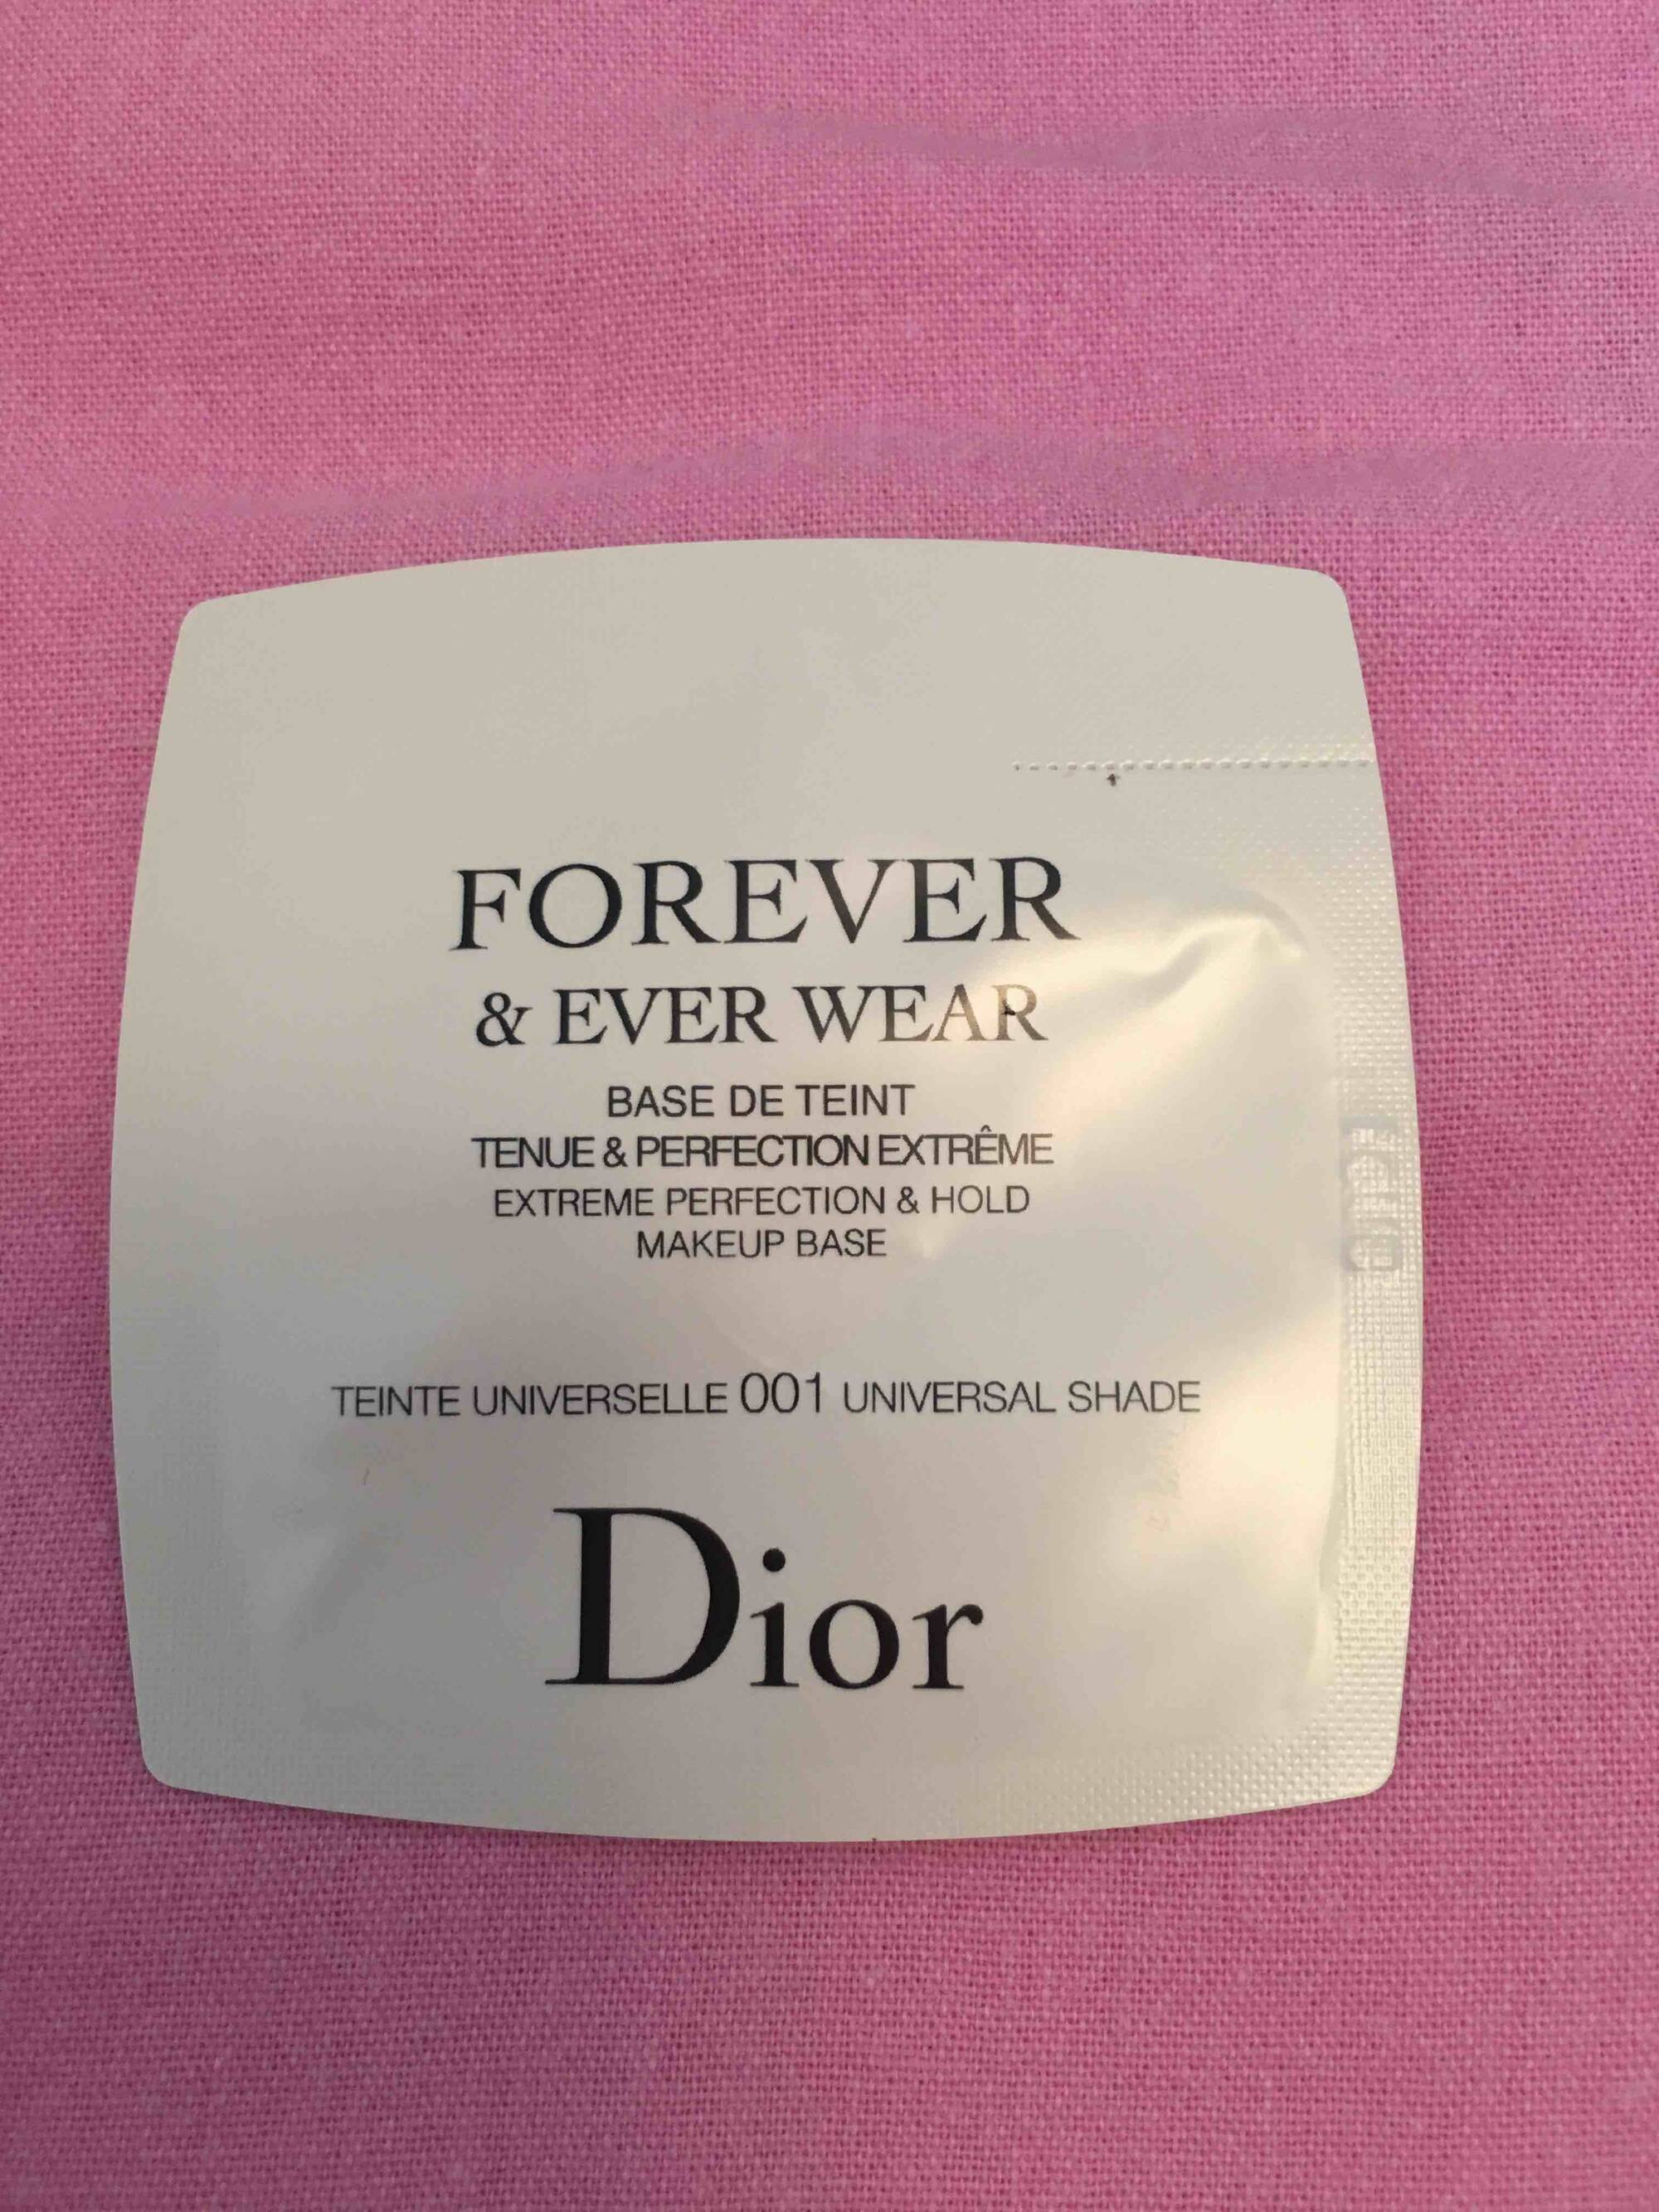 DIOR - Forever & ever wear - Base de teint